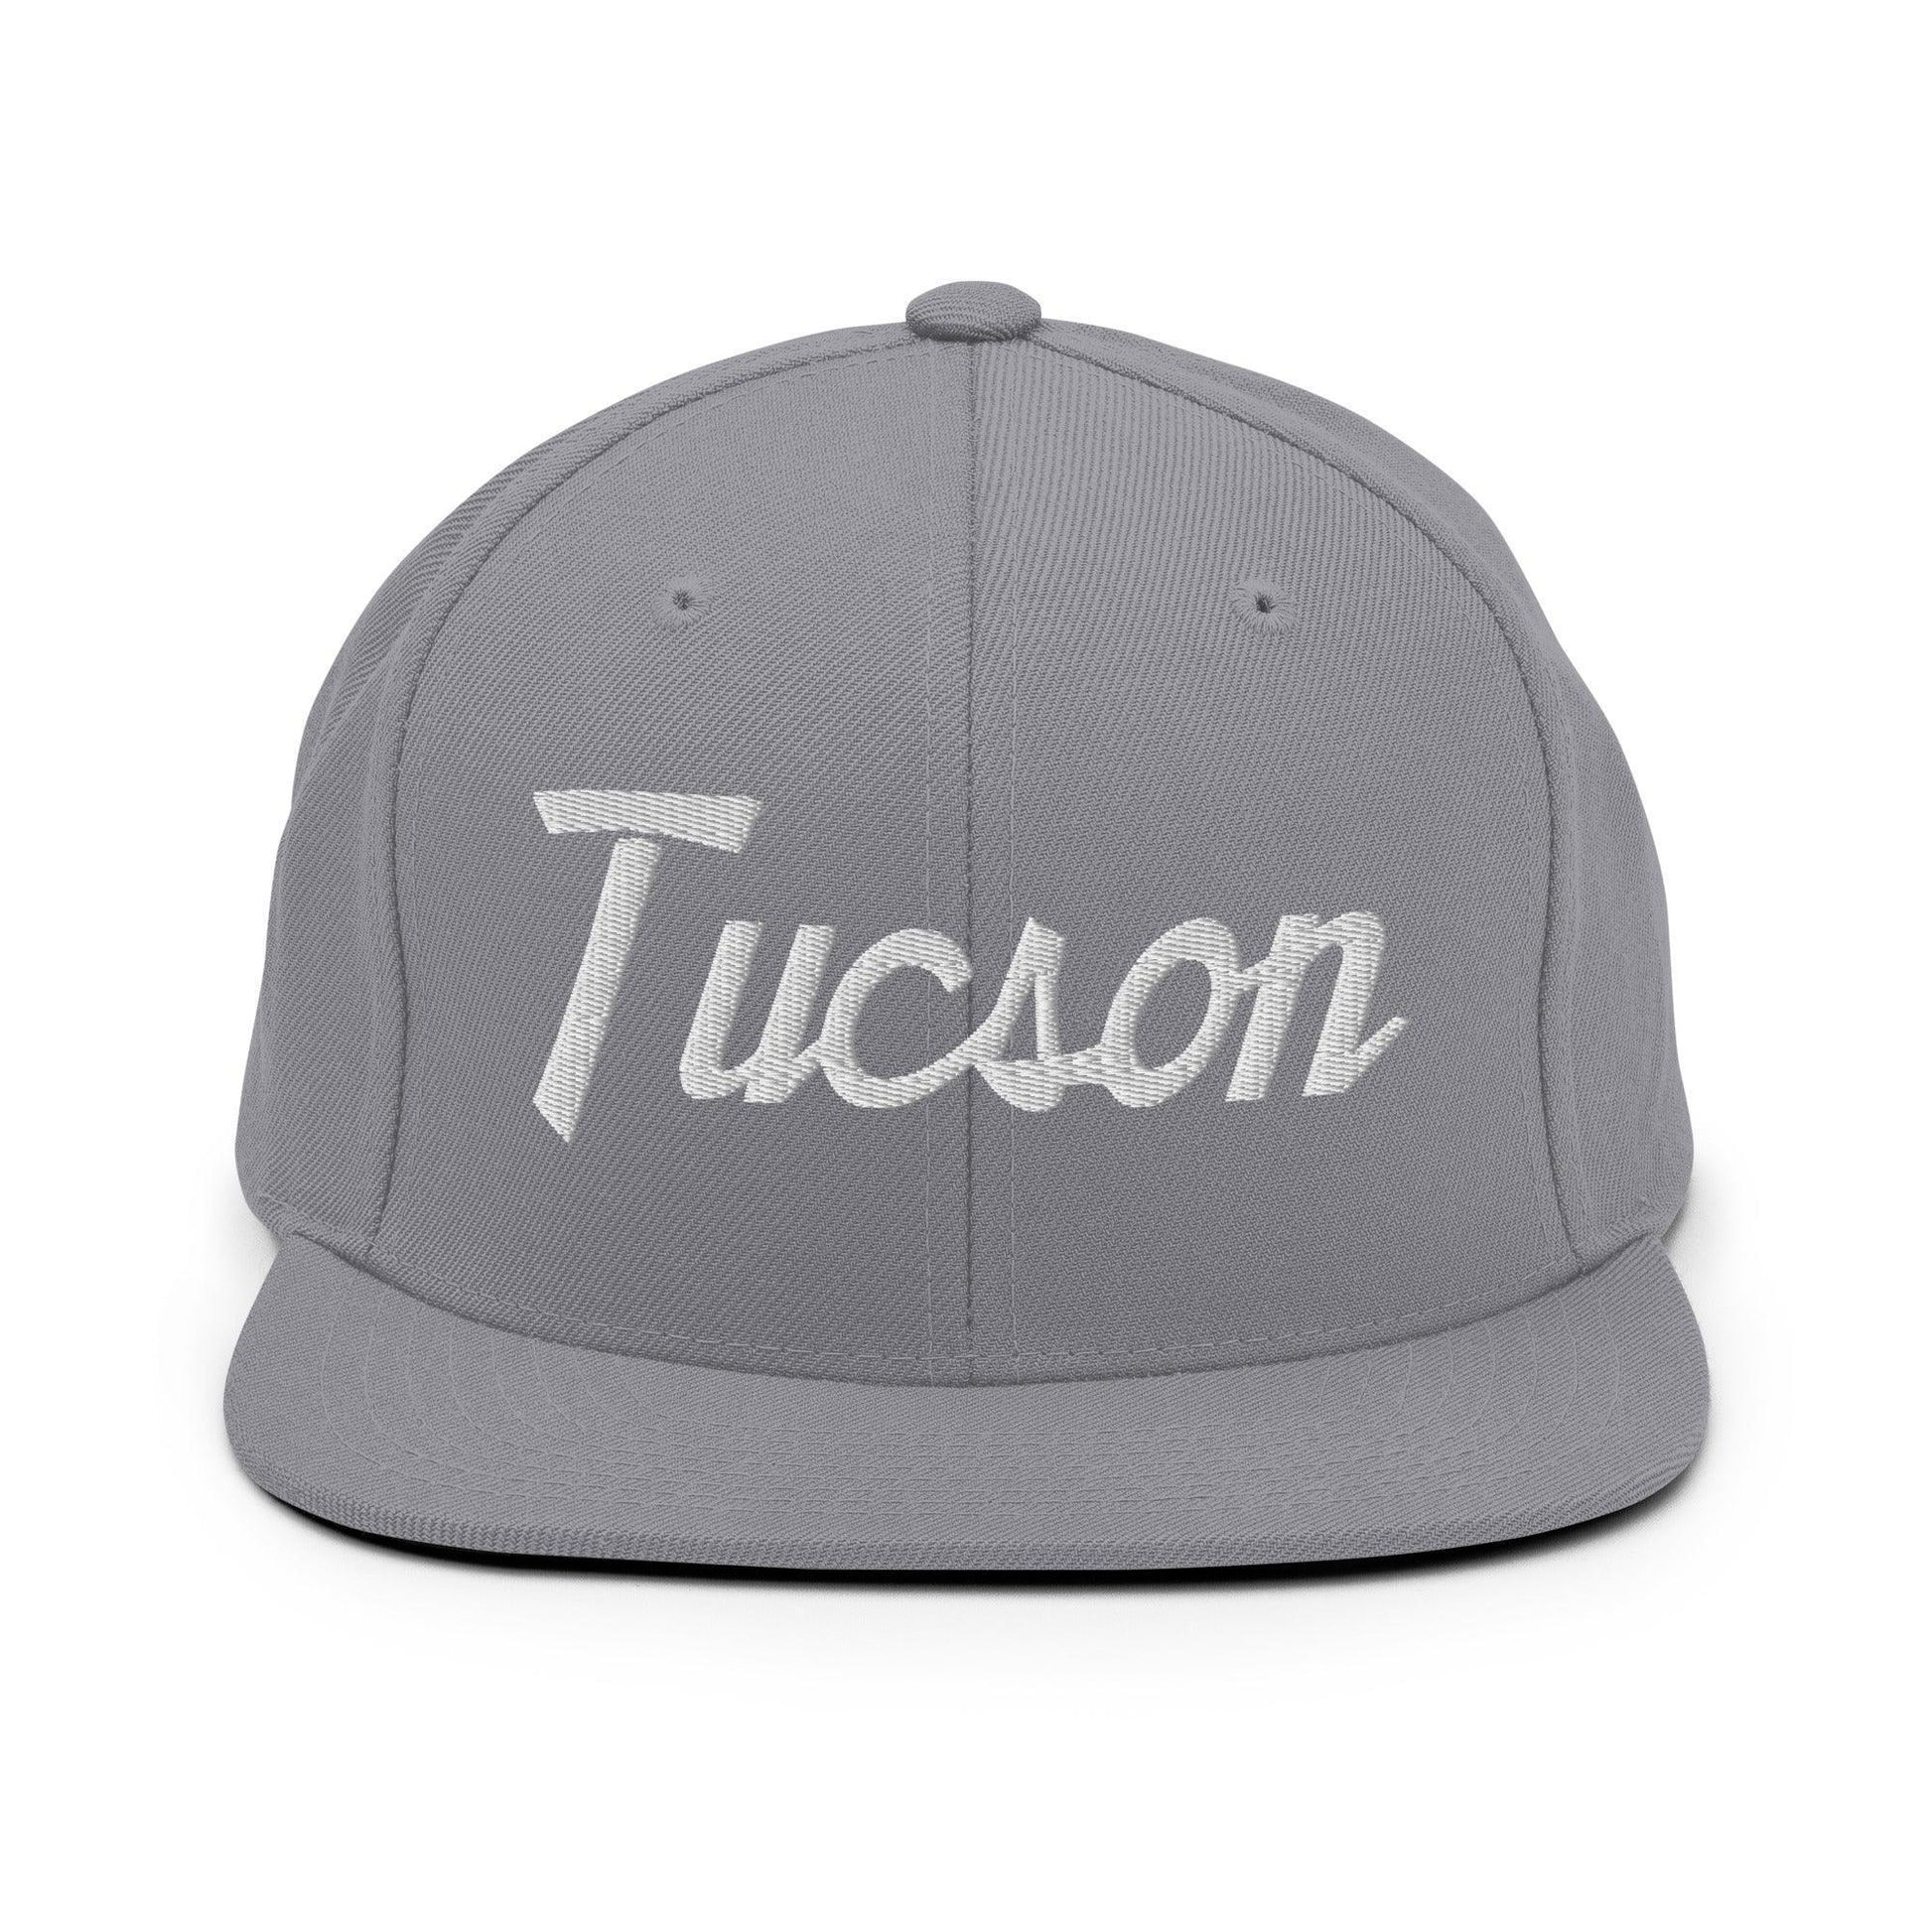 Tucson Script Snapback Hat Silver